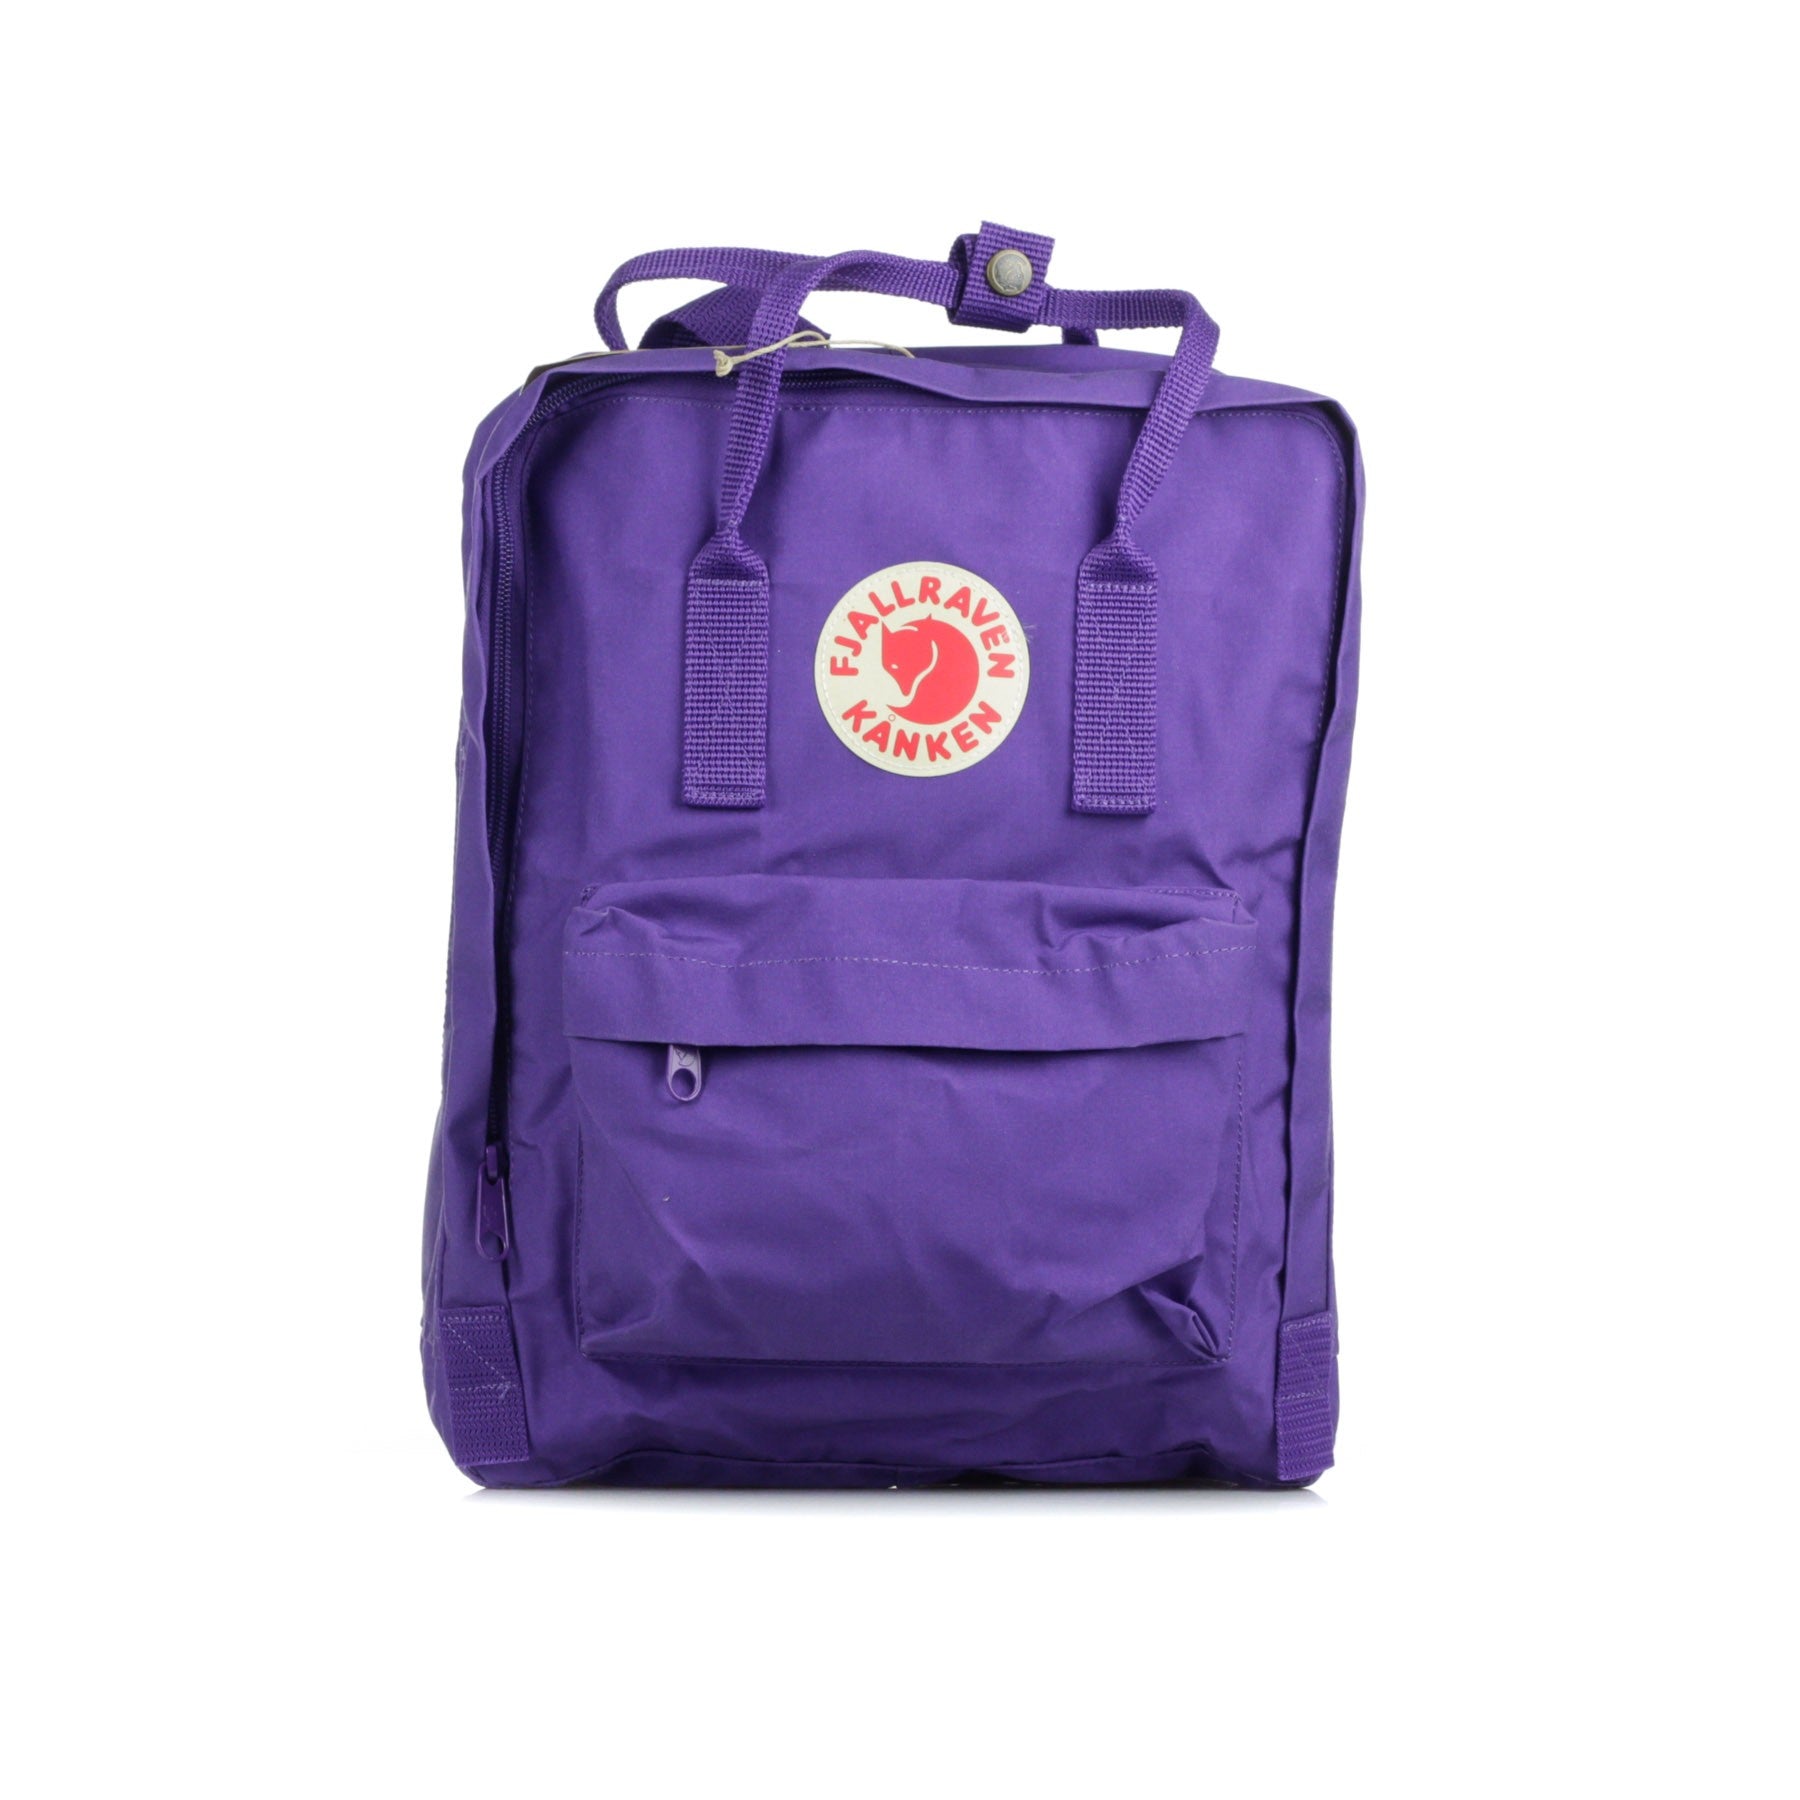 Unisex Kanken backpack